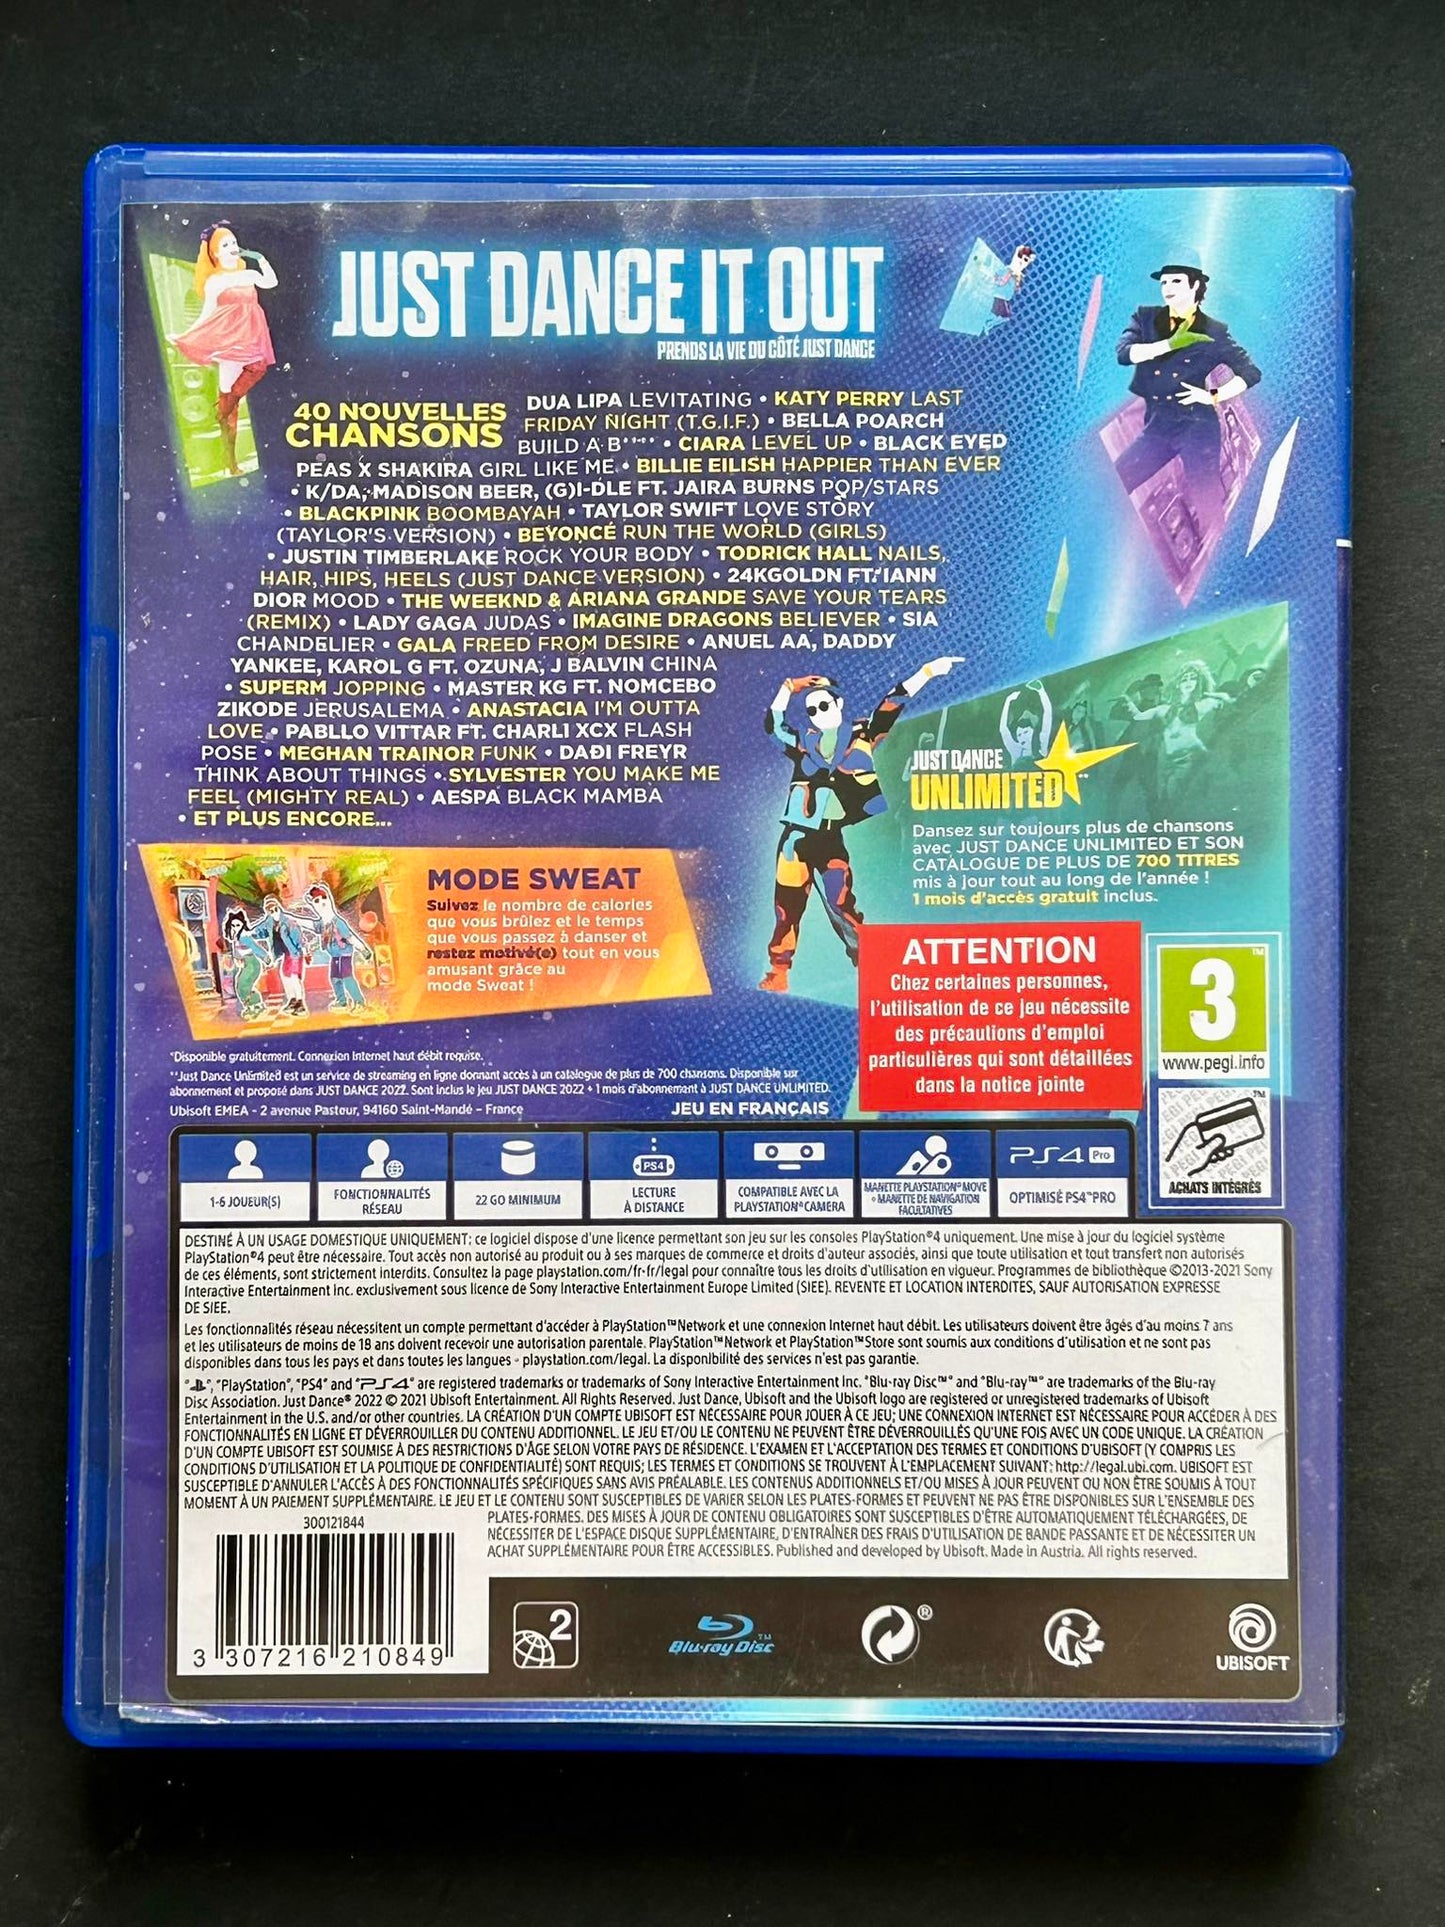 PS4 &gt; Just Dance 2022